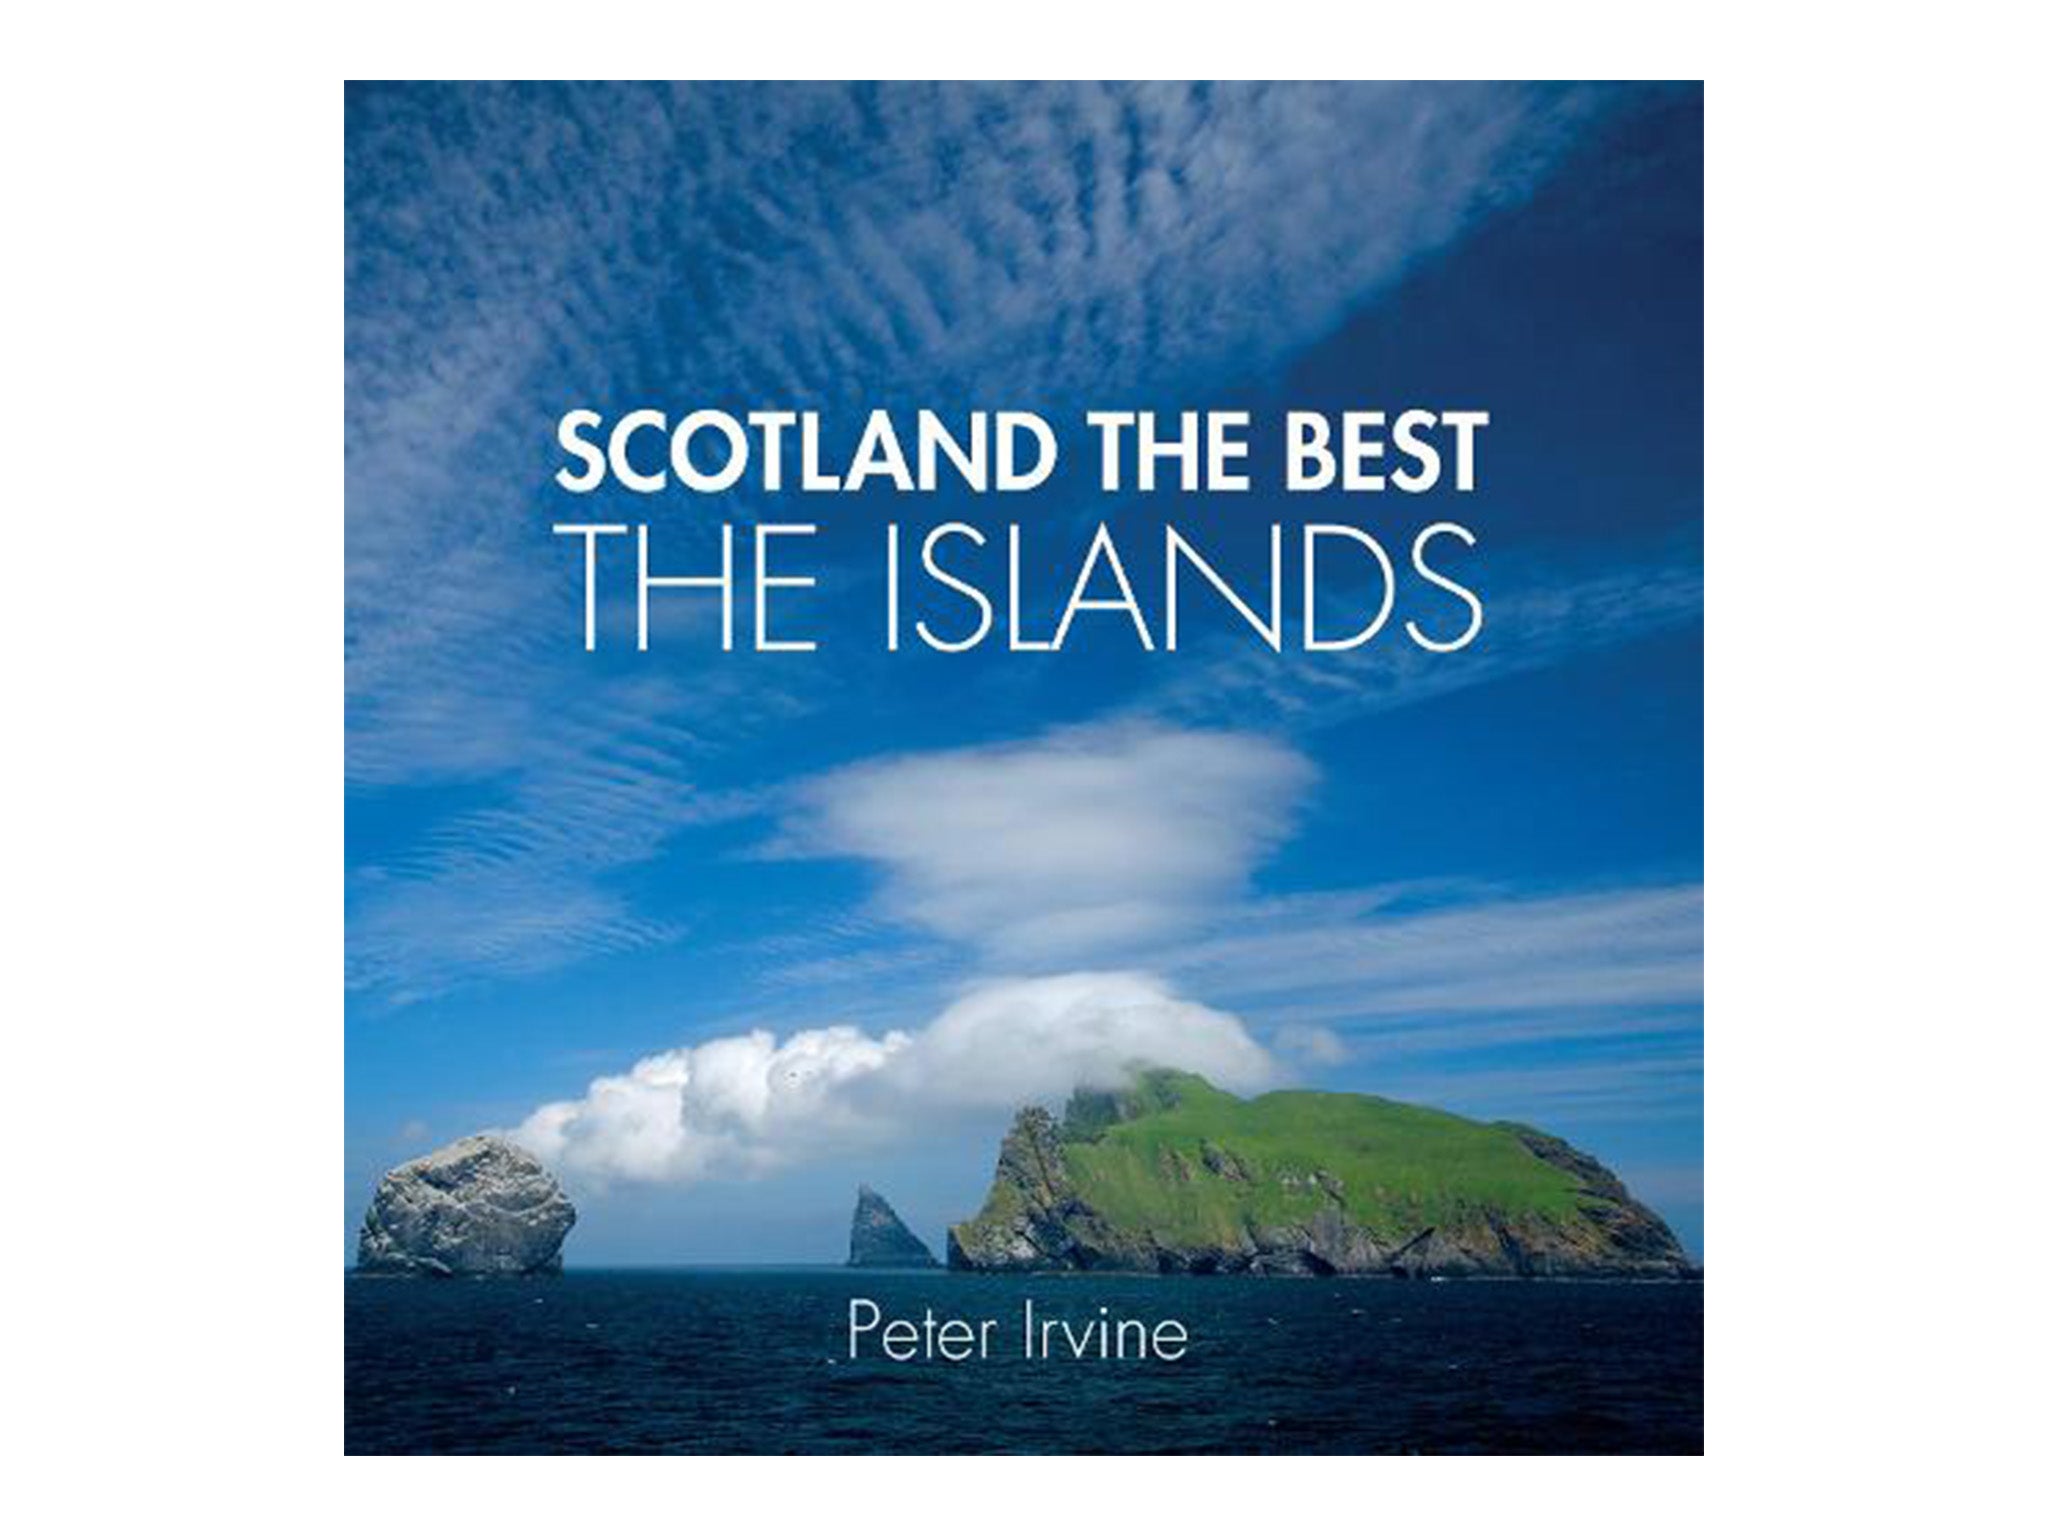 Scotland The Best- The Islands  indybest.jpg